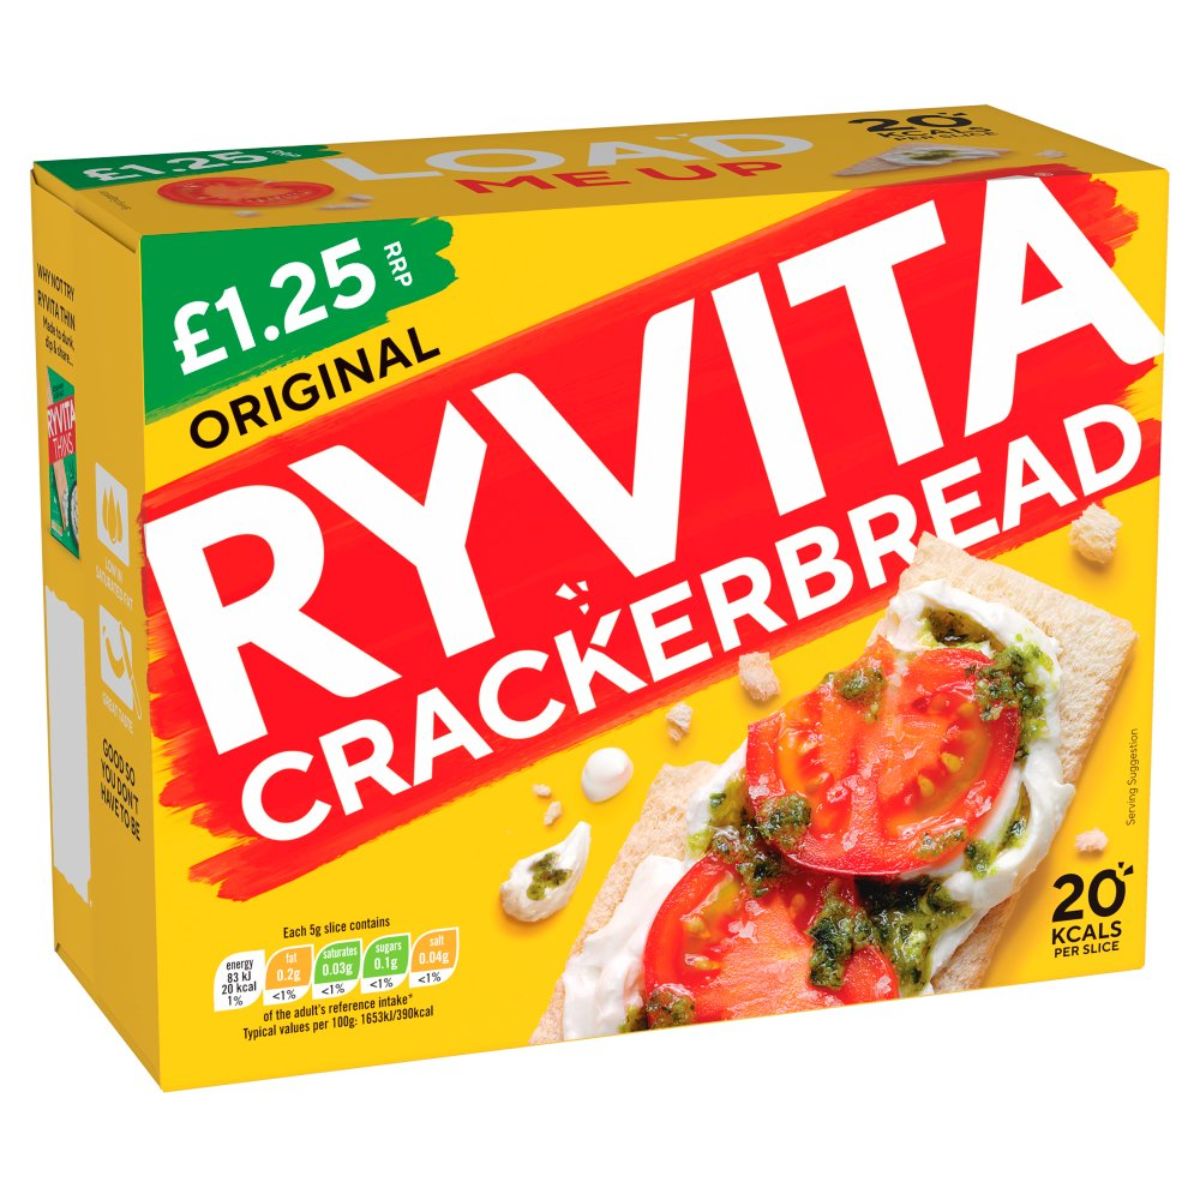 Ryvita - Crackerbread Original - 125g in a box.